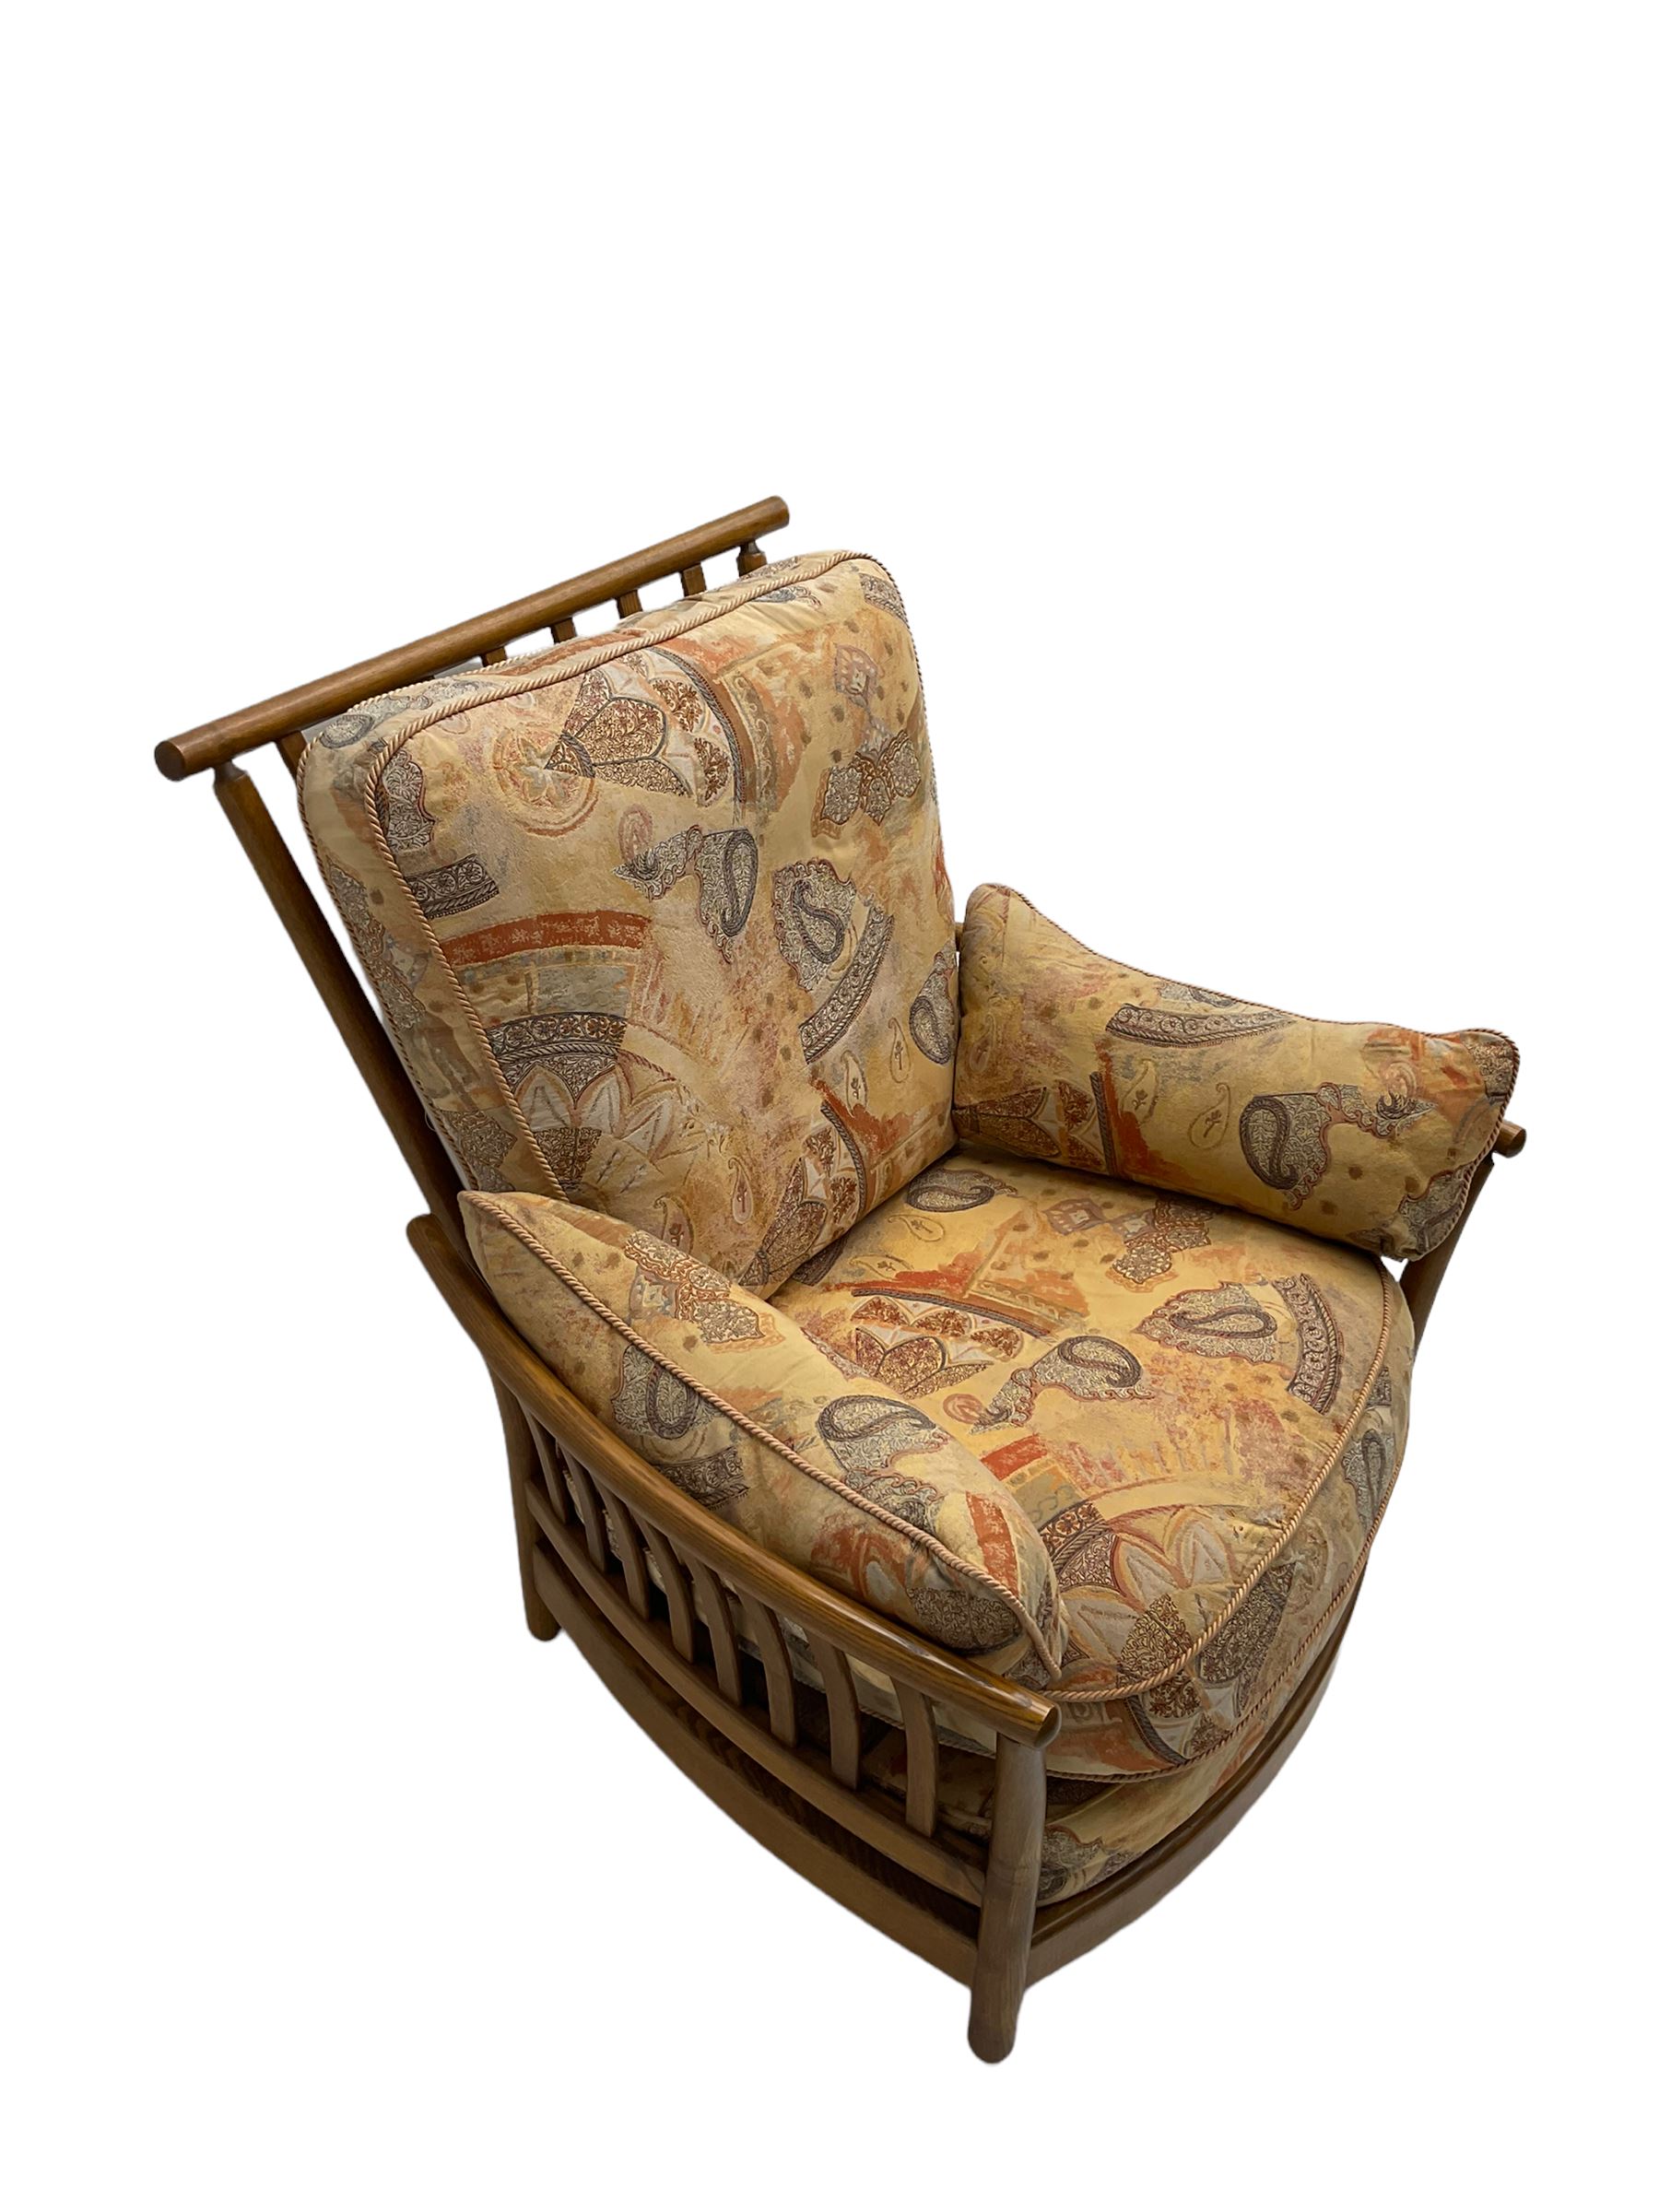 Ercol - 'Renaissance' armchair - Image 5 of 6